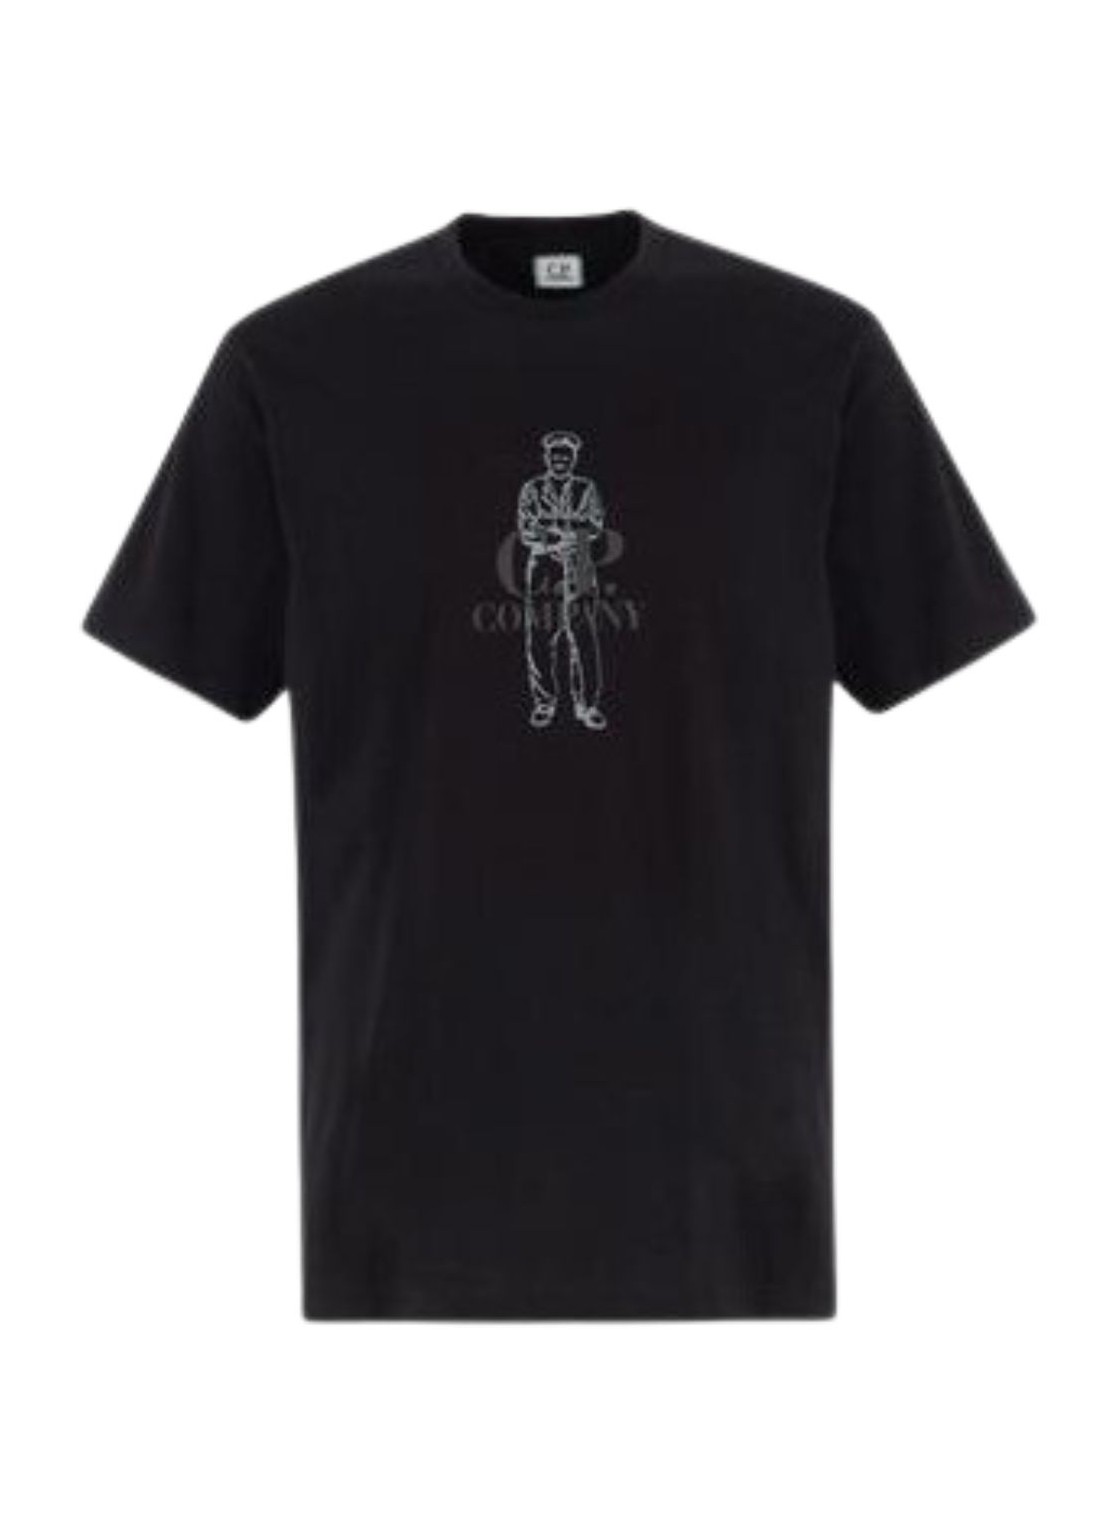 Camiseta c.p.company t-shirt man jersey british sailor t-shirt 15cmts140a005100w 888 talla M
 